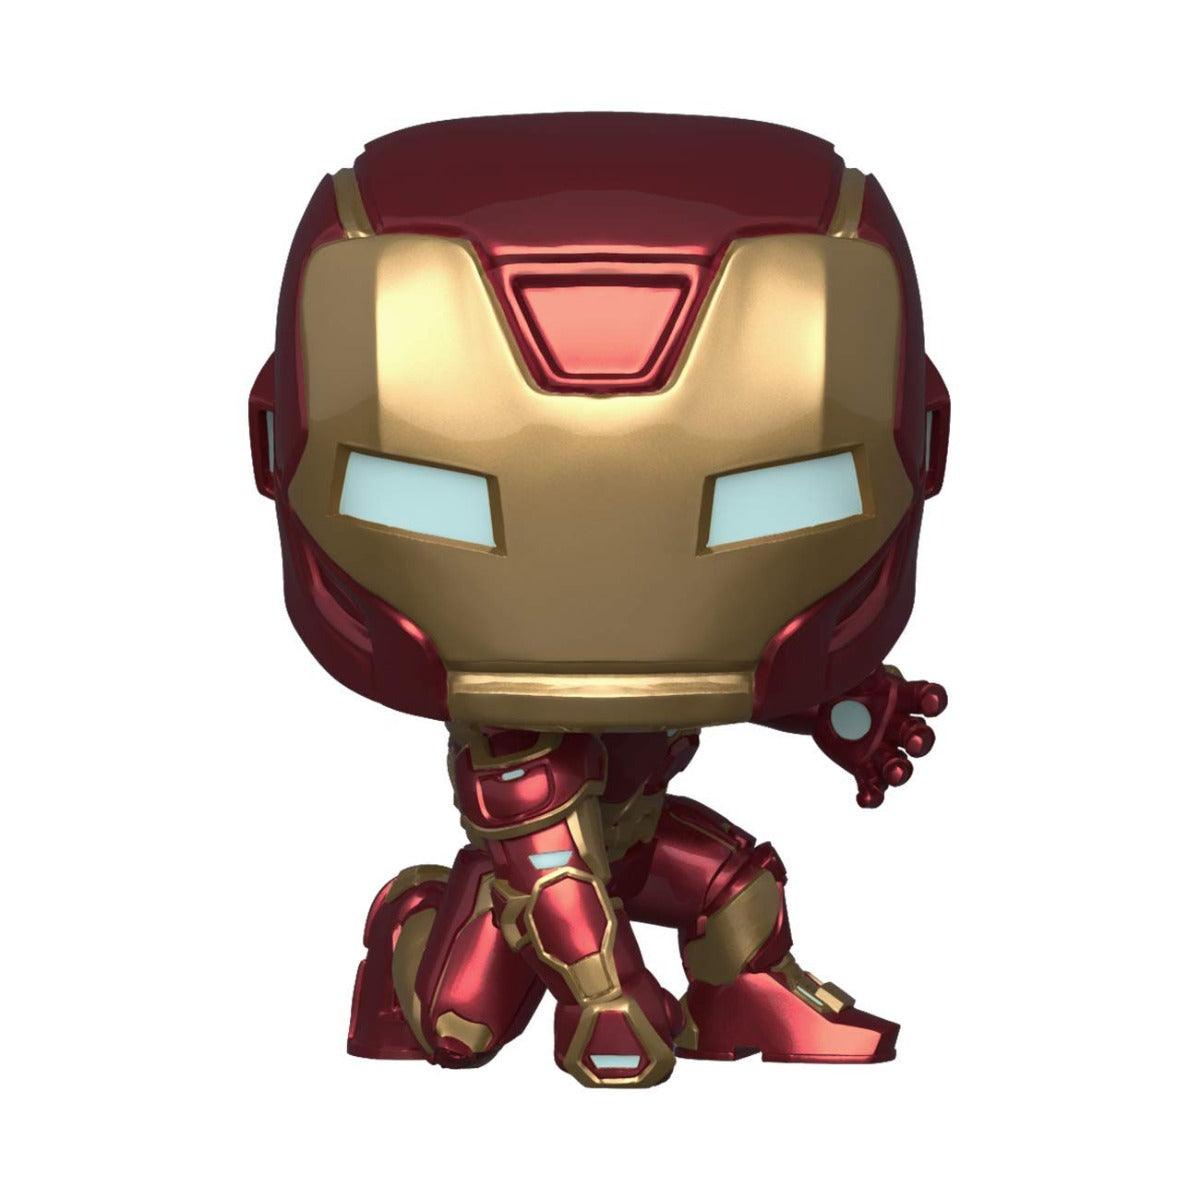 Funko Pop Marvel: Avengers Game - Iron Man (Stark Tech Suit) 626